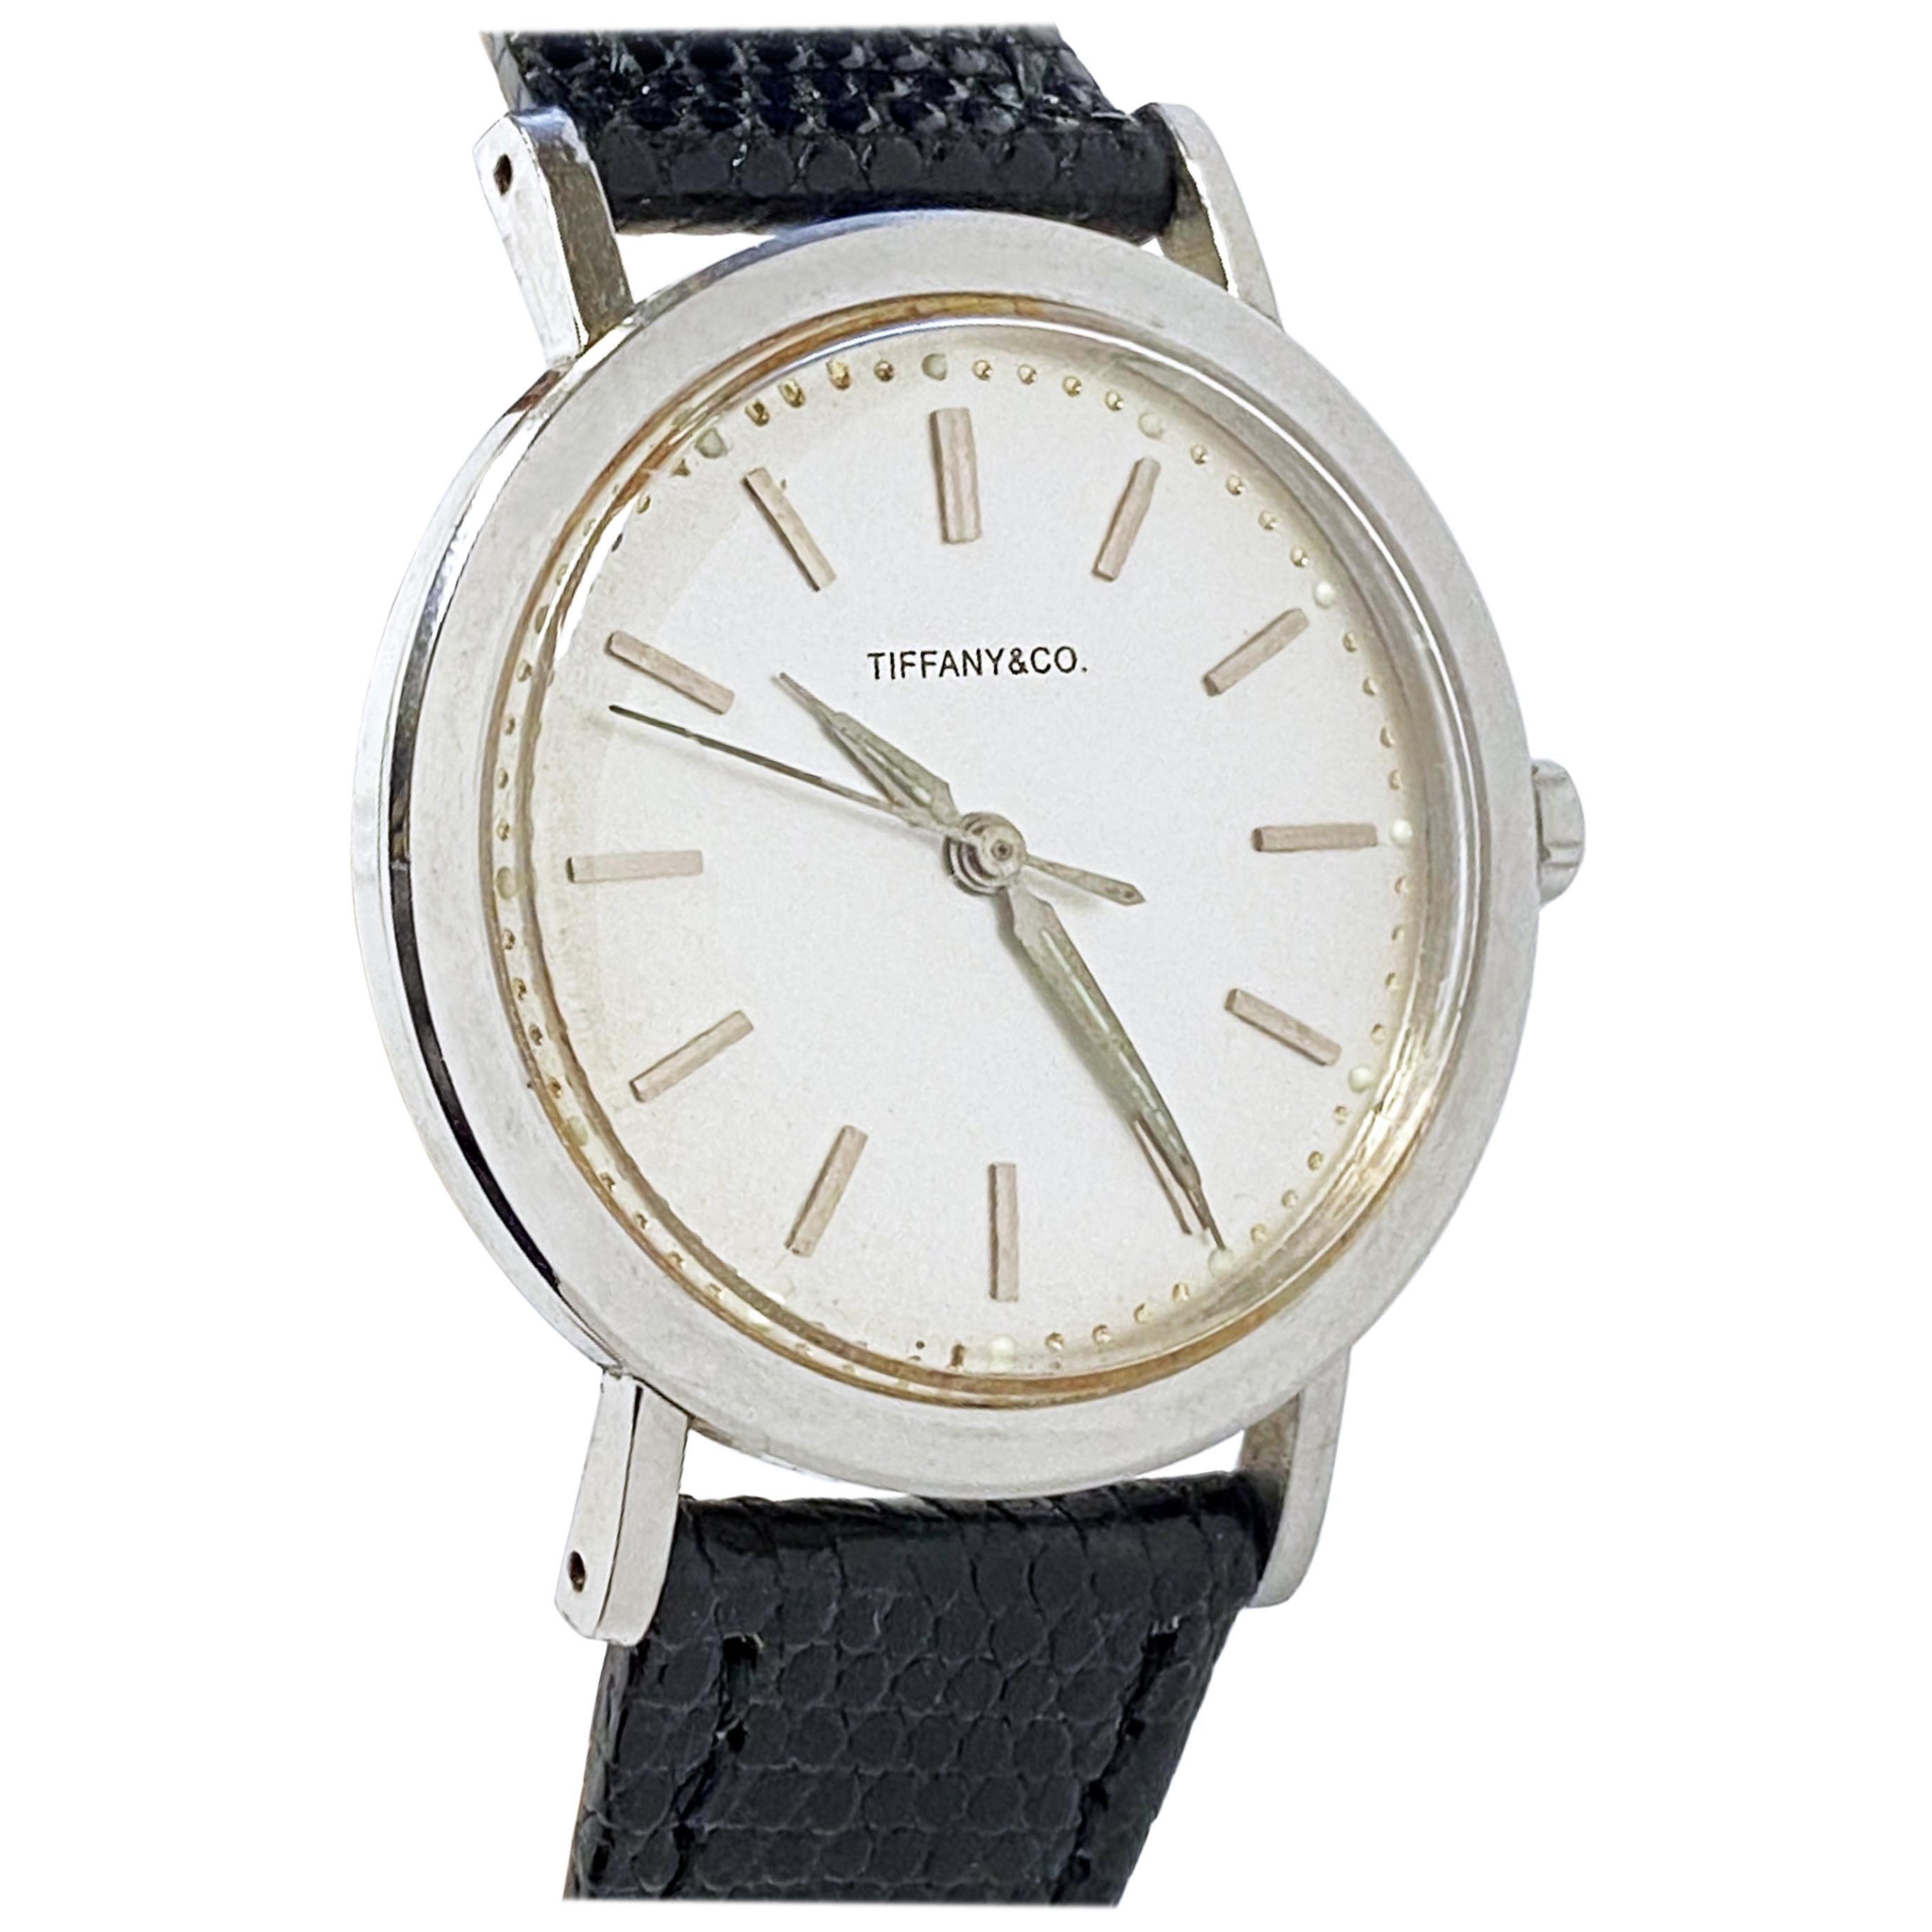 Gubelin for Tiffany & Co. Vintage Steel Automatic Wrist Watch